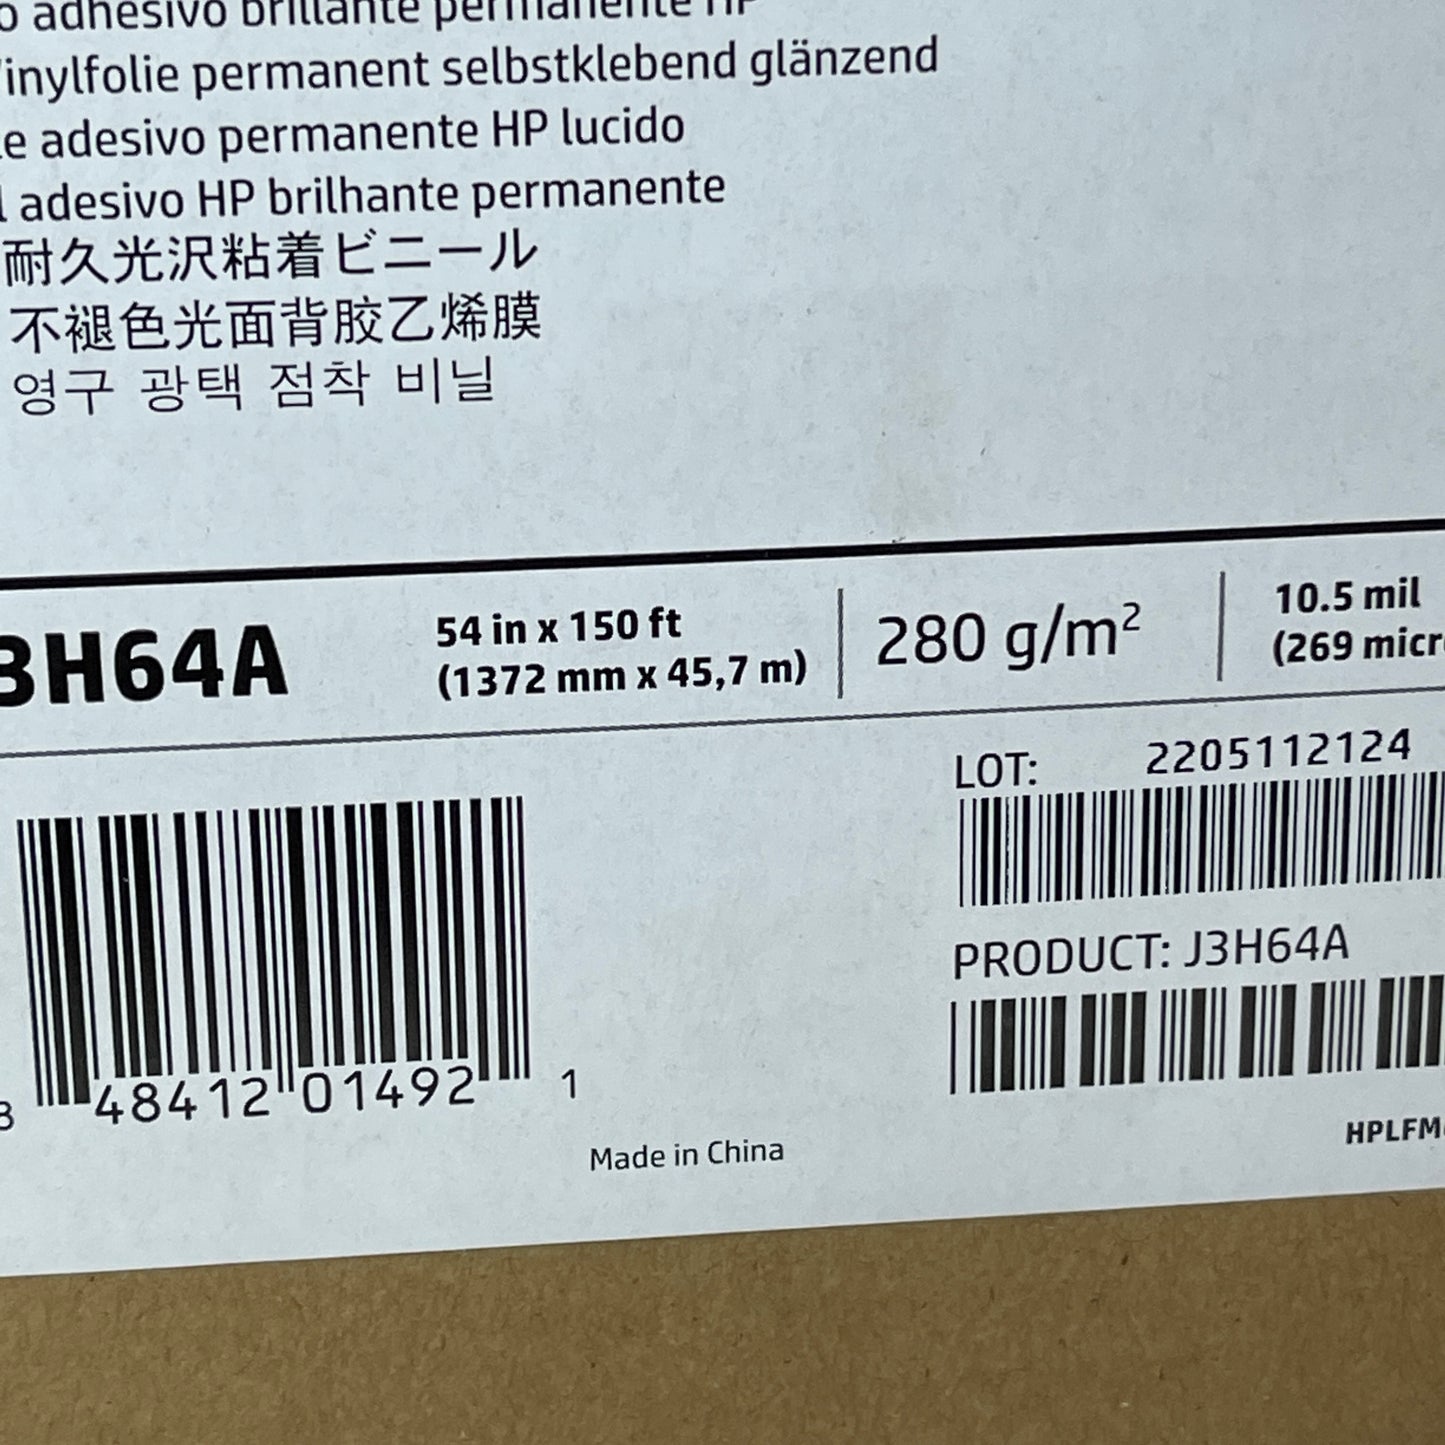 HP Permanent Gloss Adhesive Vinyl 54" X 150' 10.5 mil J3H64A (New)